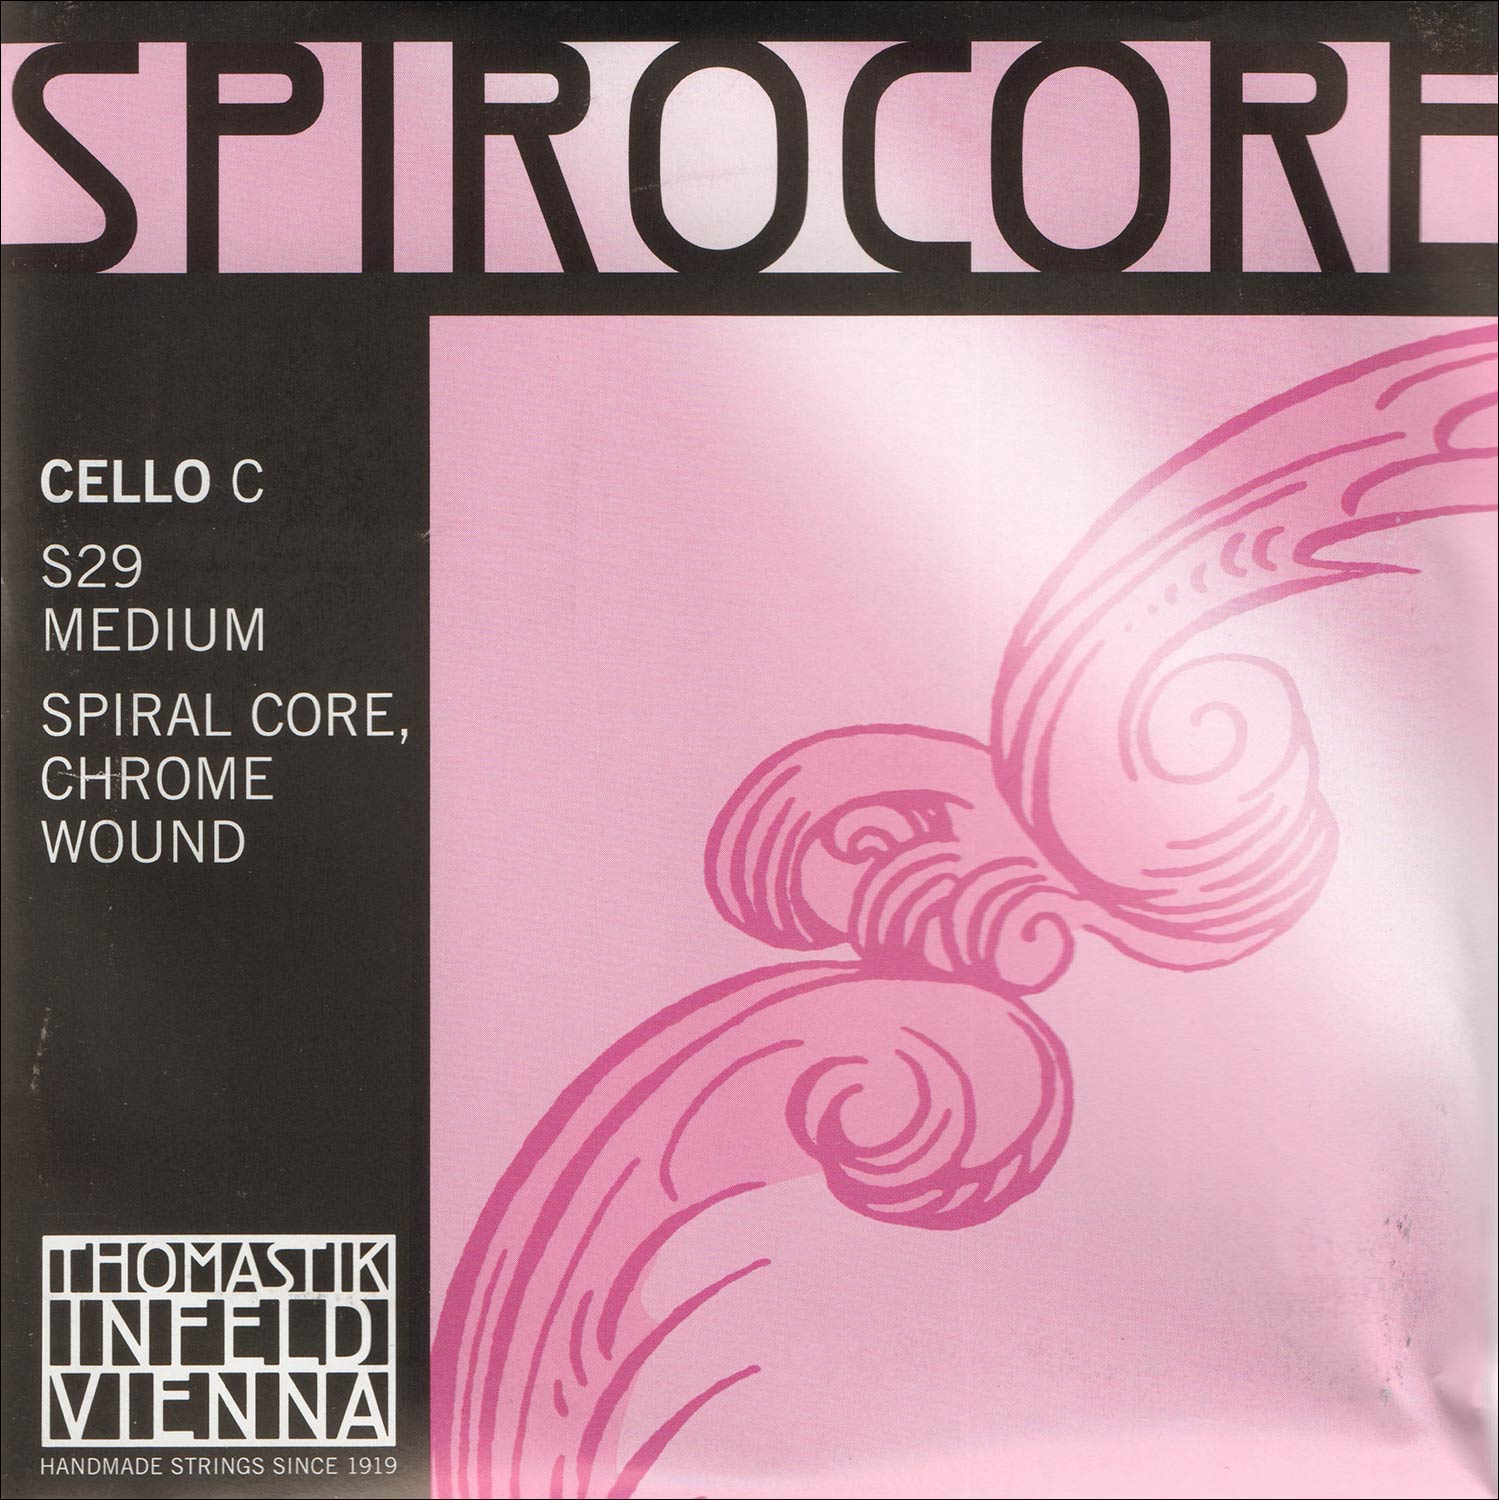 Spirocore Cello C - chr/steel: Medium